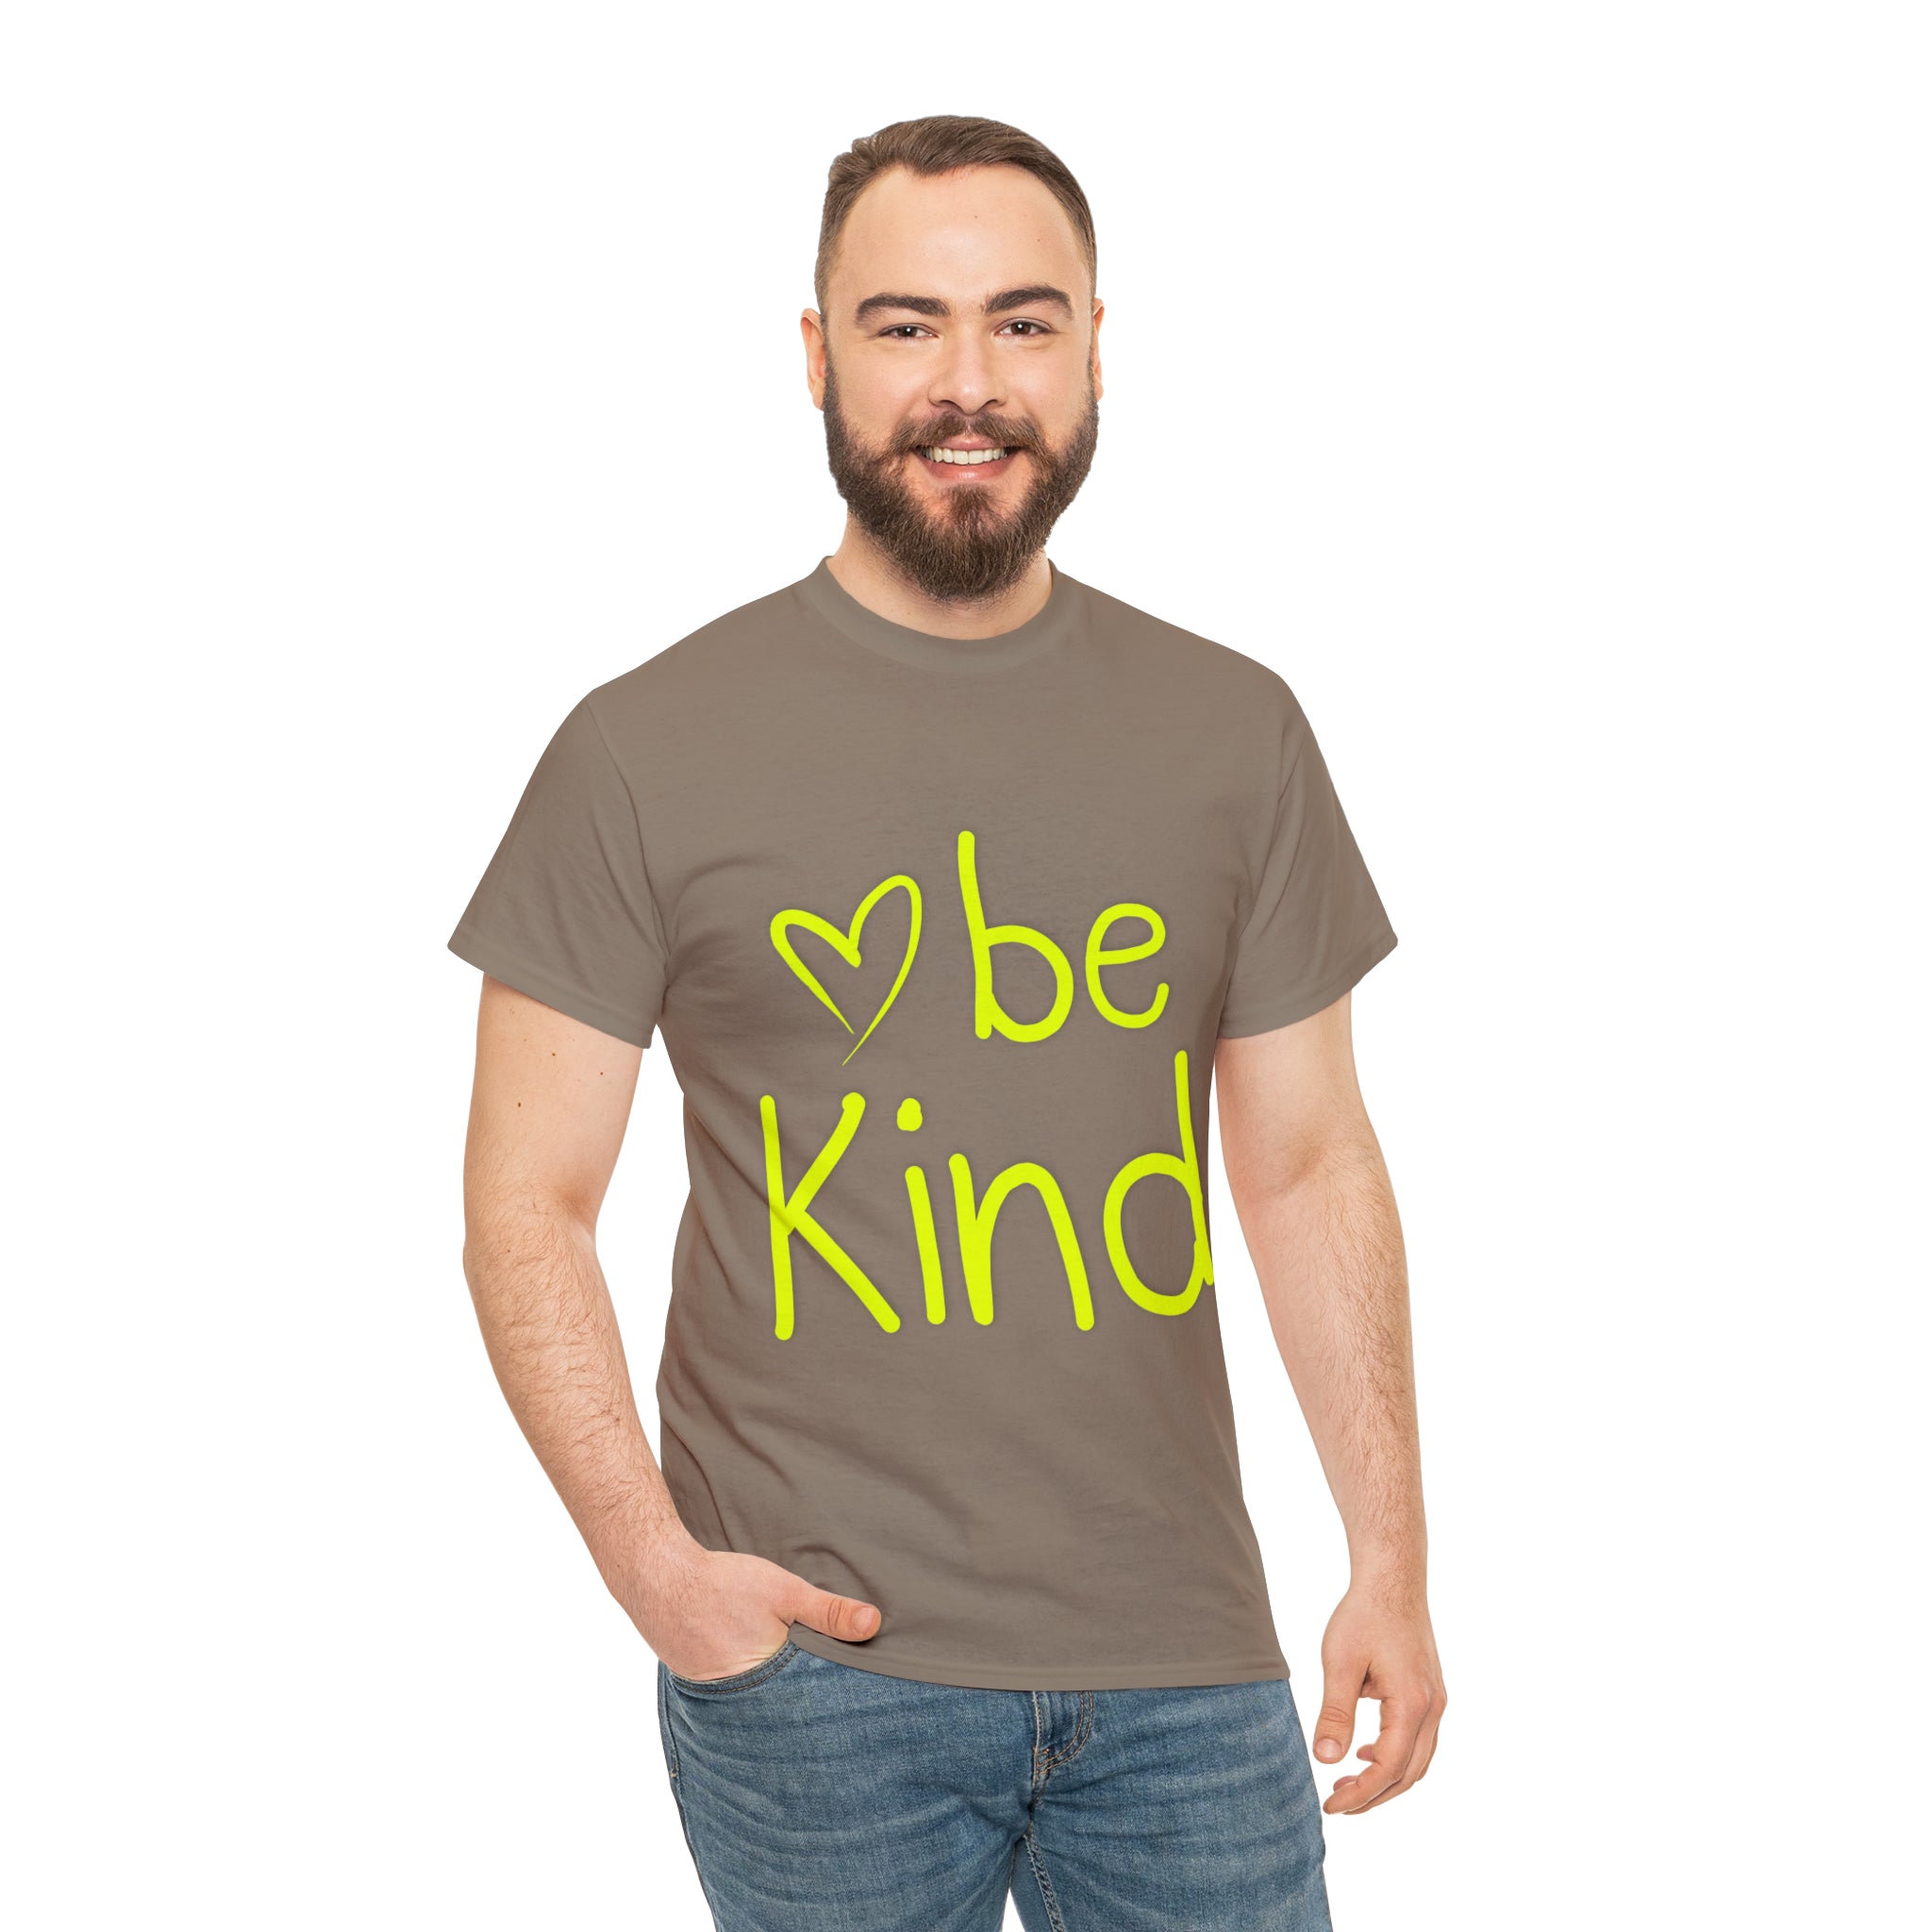 Be Kind T-Shirt Designed by Big Brain Brew